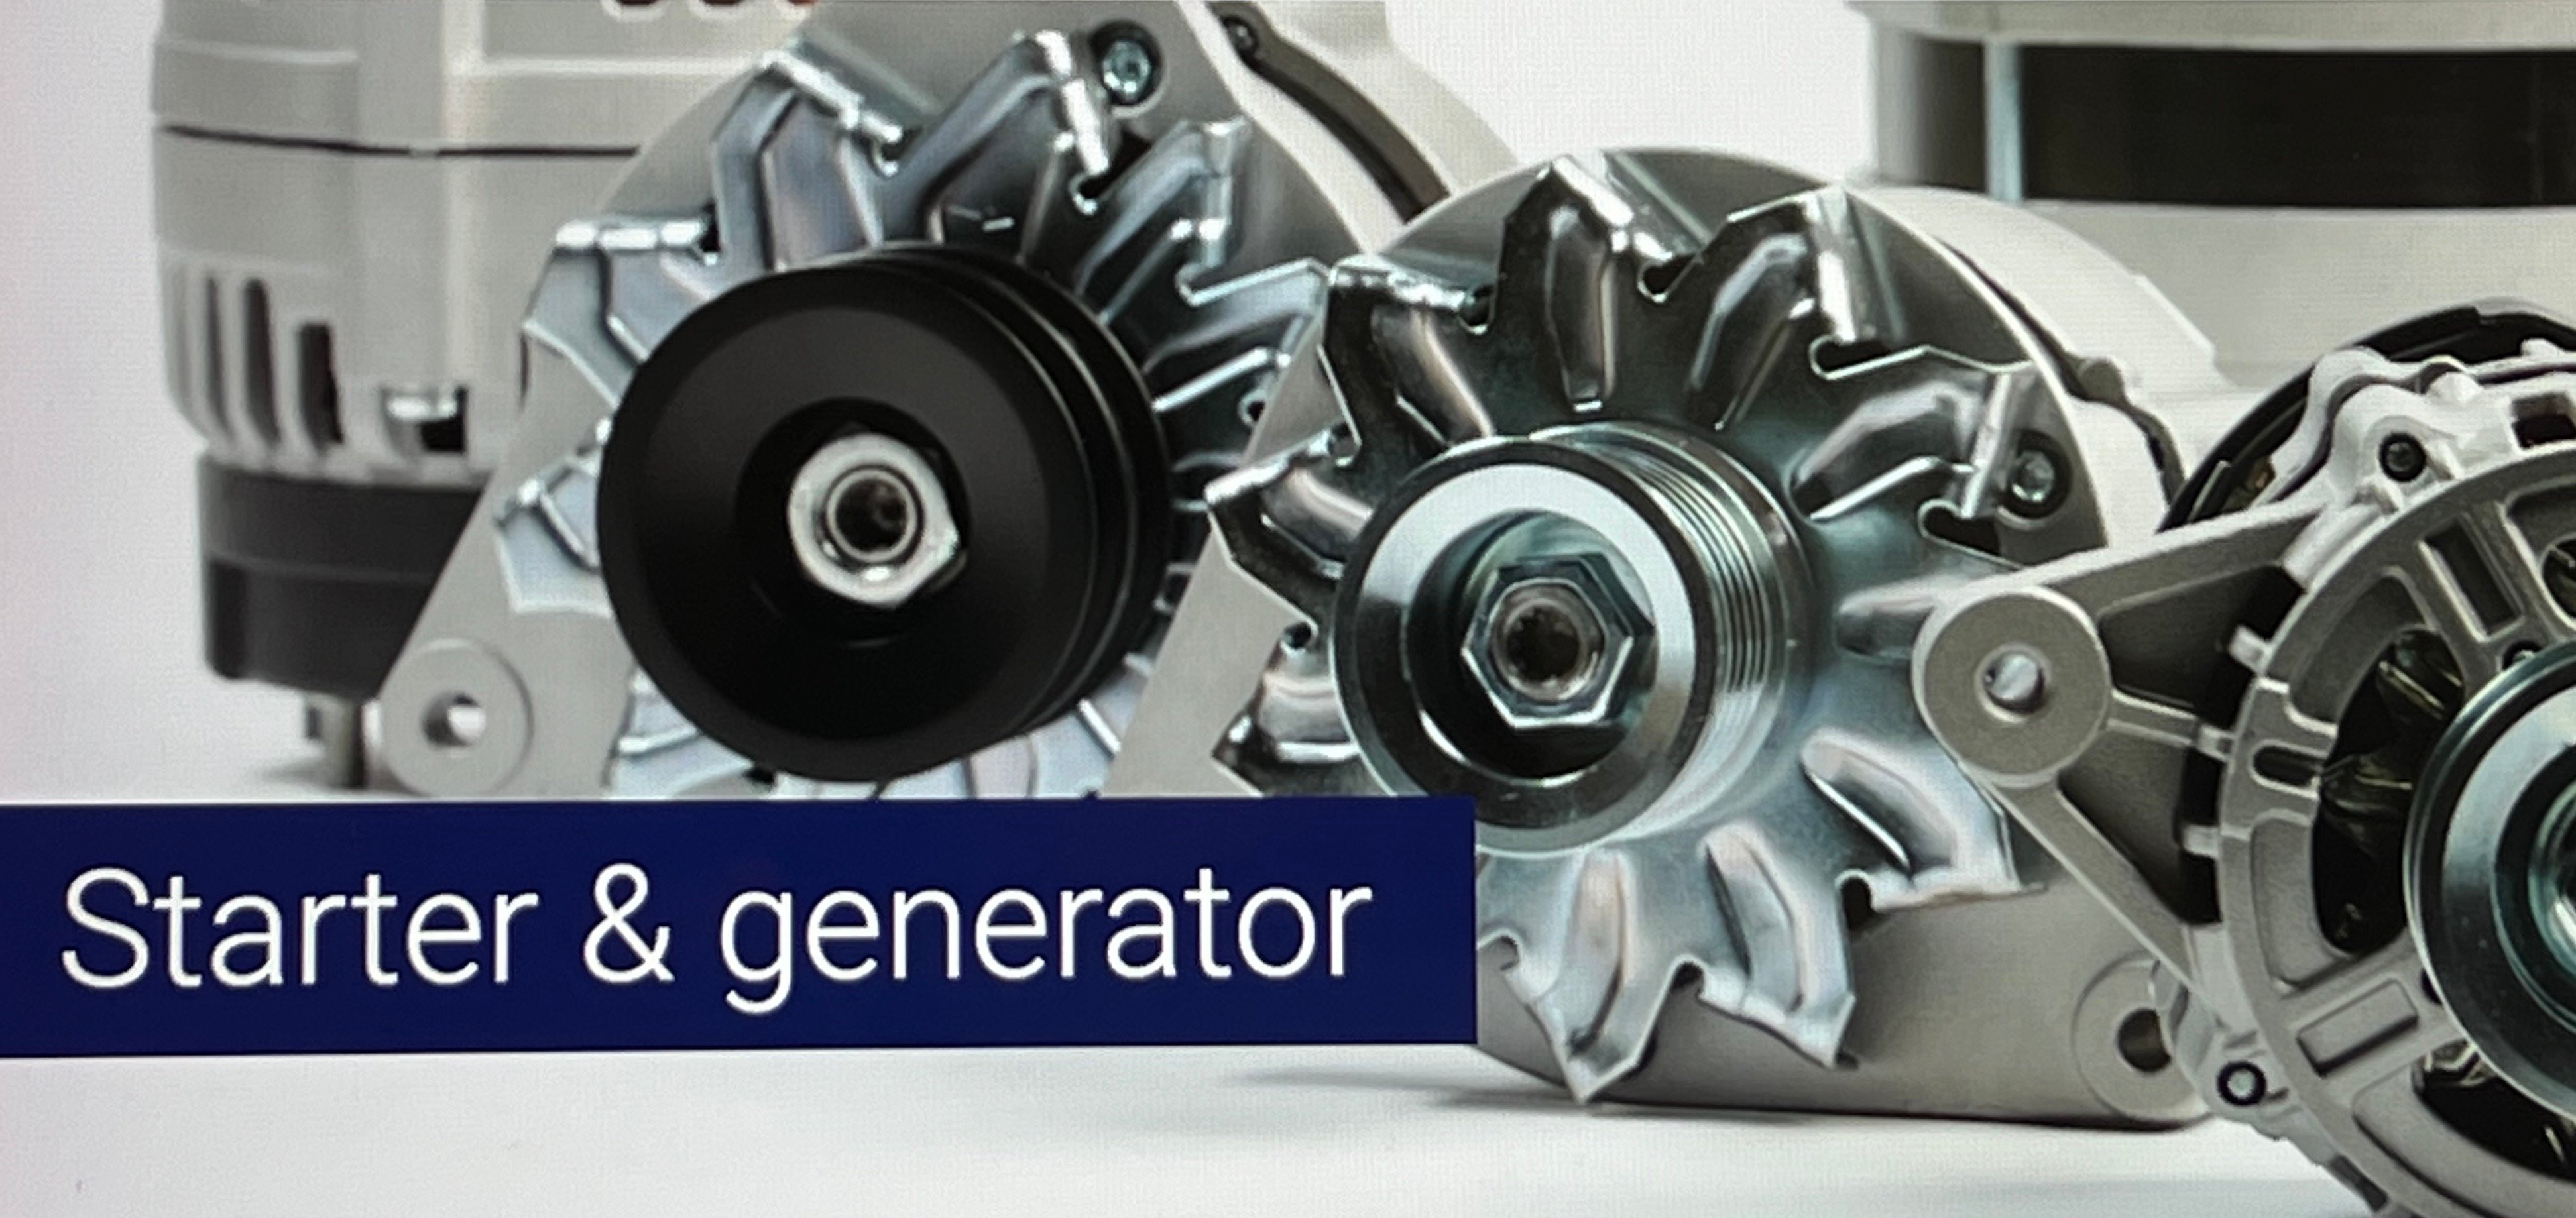 starter and generator image